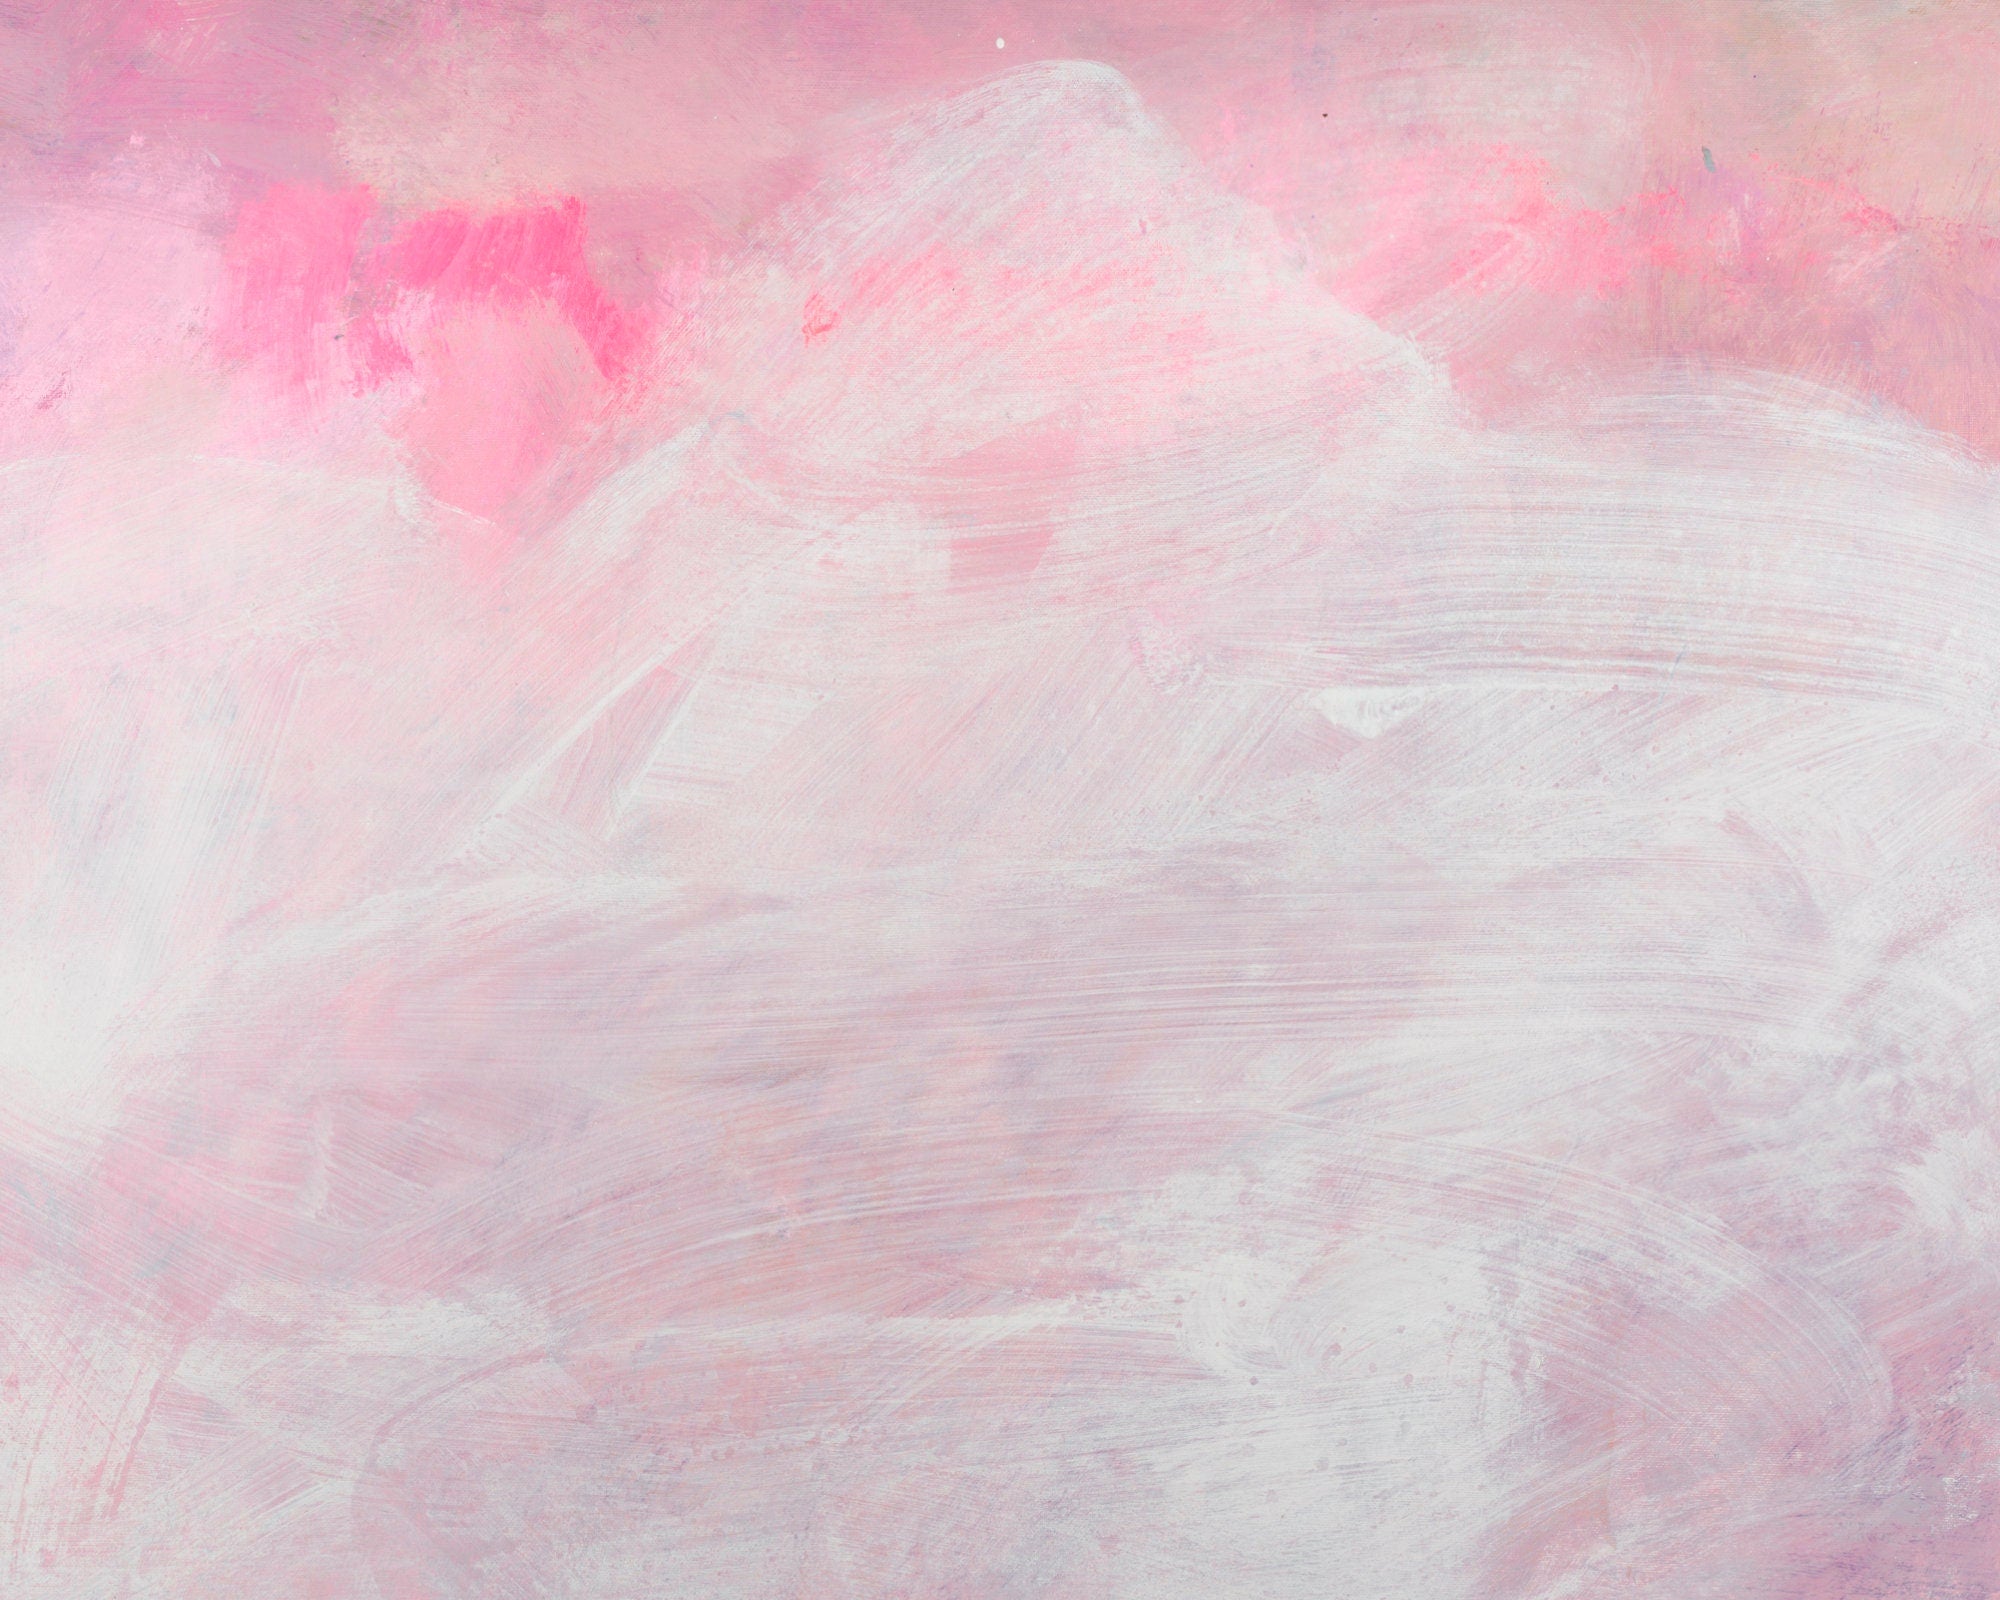 Detail of a minimalist brush stroke art in pink by Camilo Mattis